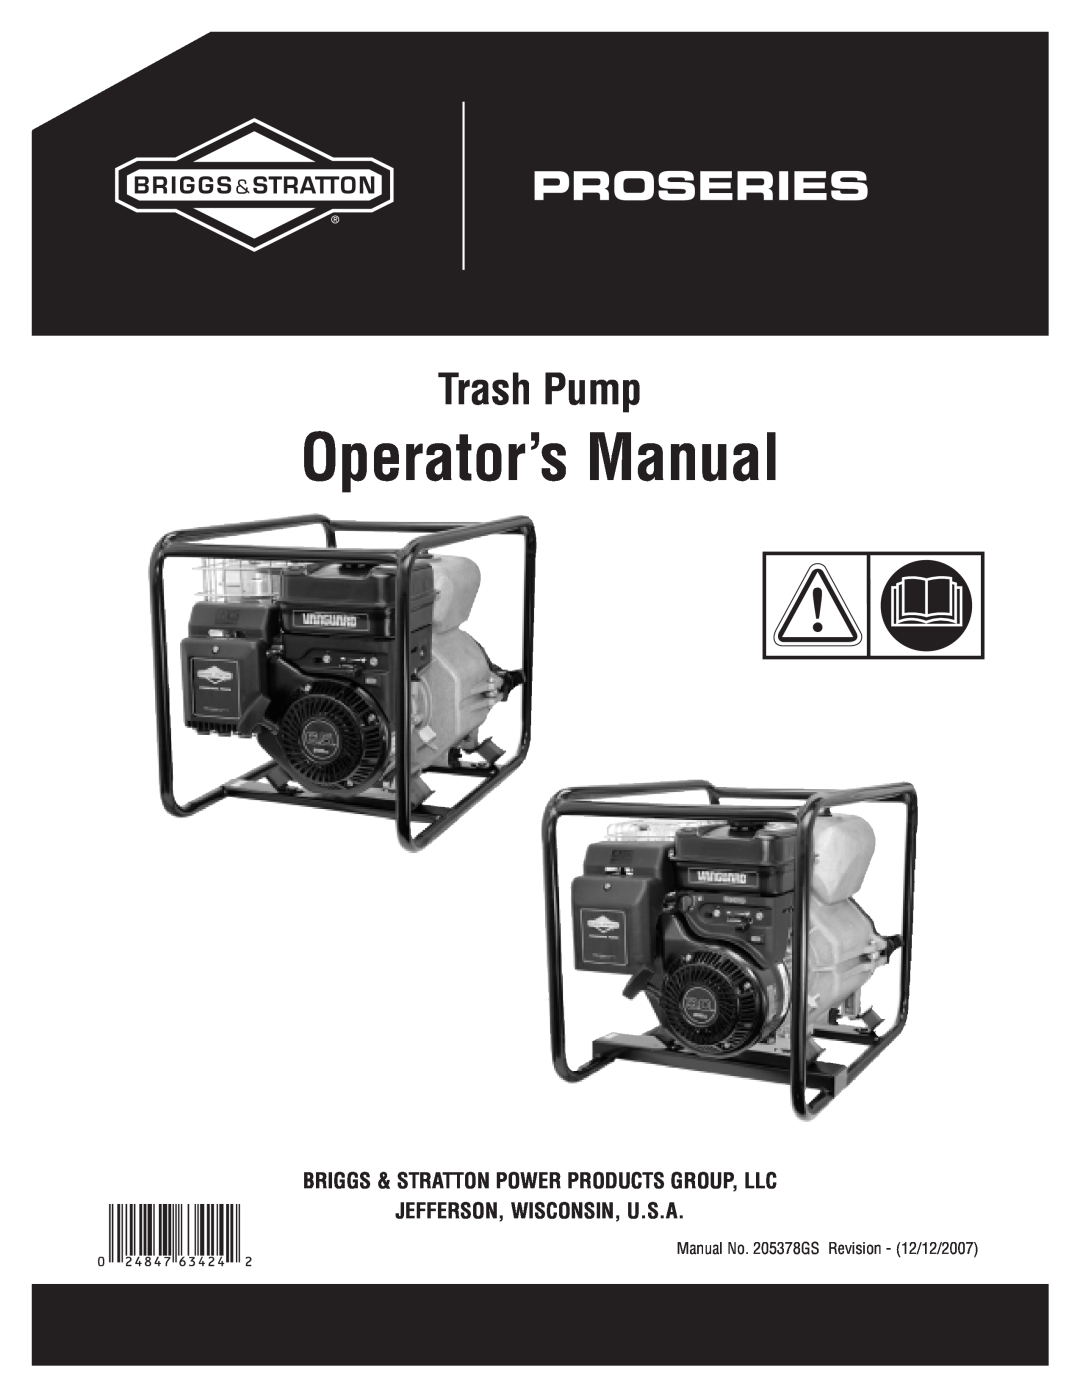 Briggs & Stratton 205378GS manual Operator’s Manual, Trash Pump, Briggs & Stratton Power Products Group, Llc 